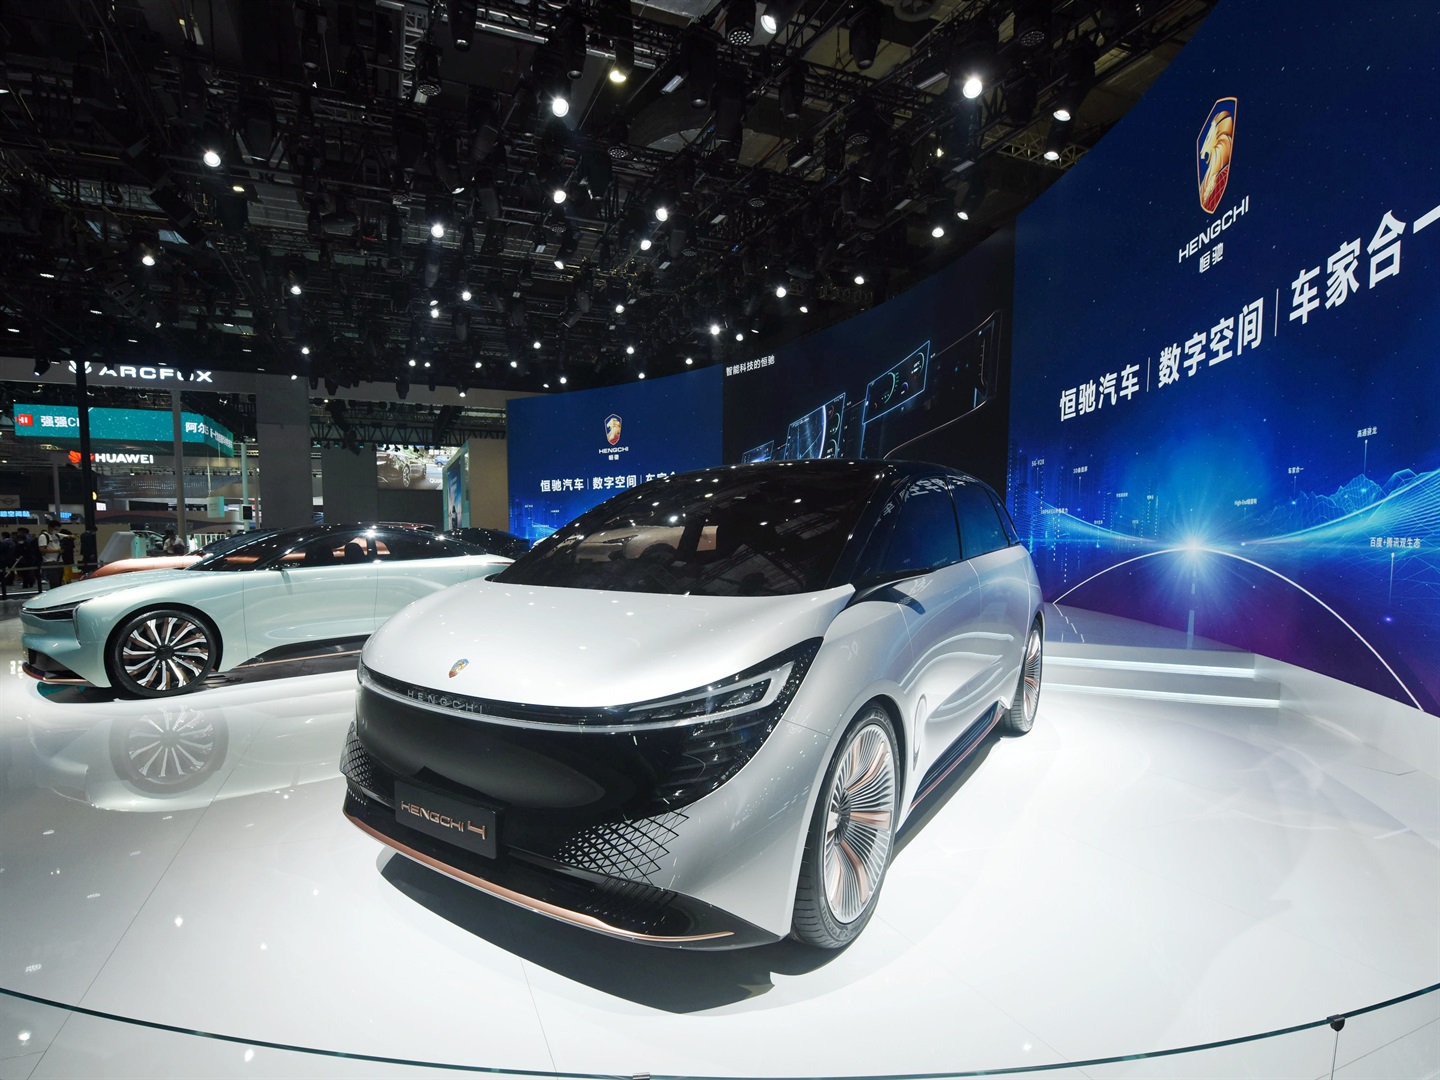 Evergrande wants to make electric cars its core business, CEO Hui Ka Yan said. Costfoto/Barcroft Media/Getty Images